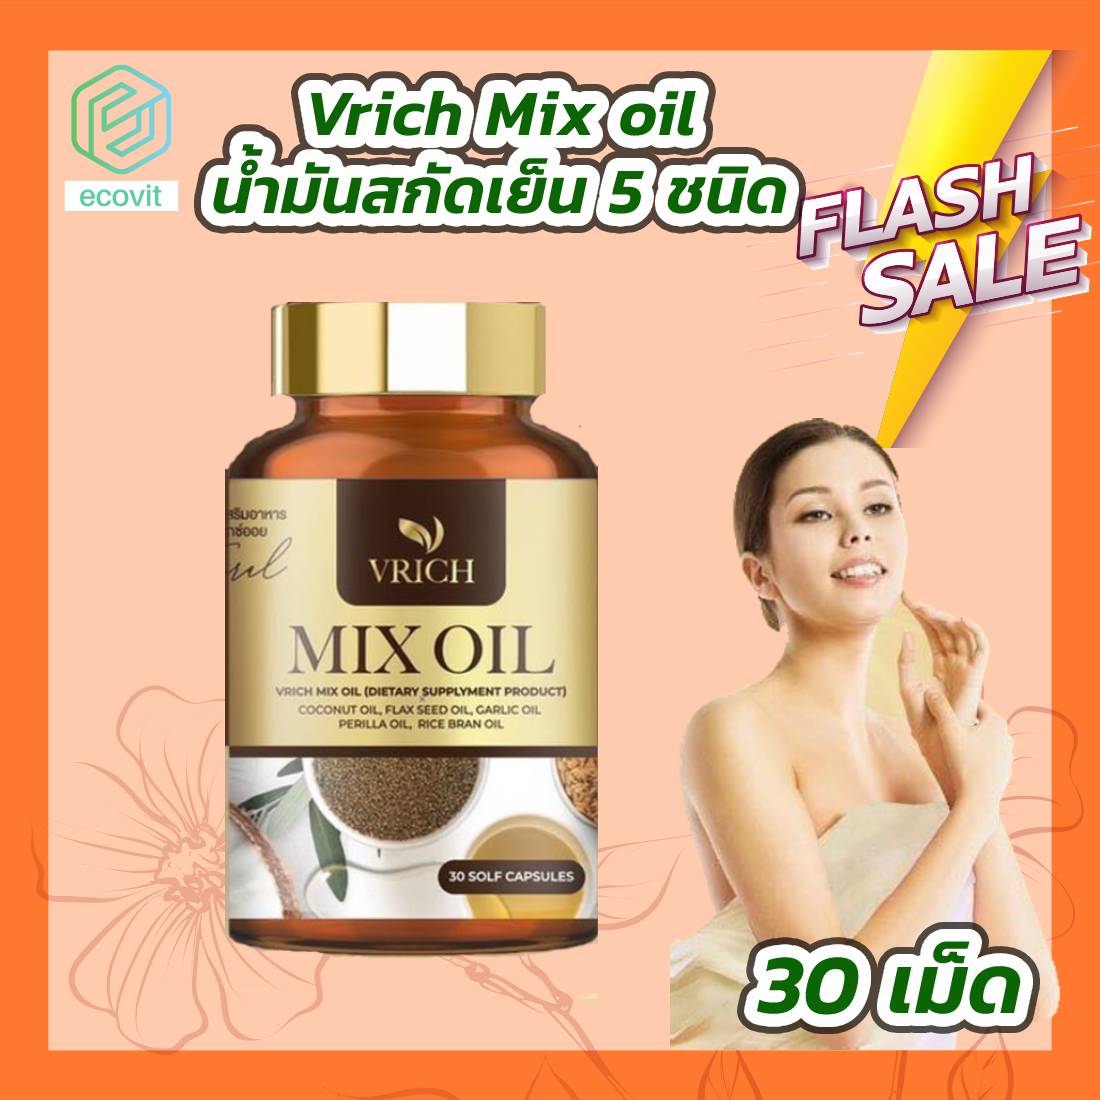 Vrich Mix oil วีริช มิกซ์ ออยล์ น้ำมันสกัดเย็น 5 ชนิด( 30 เม็ด)